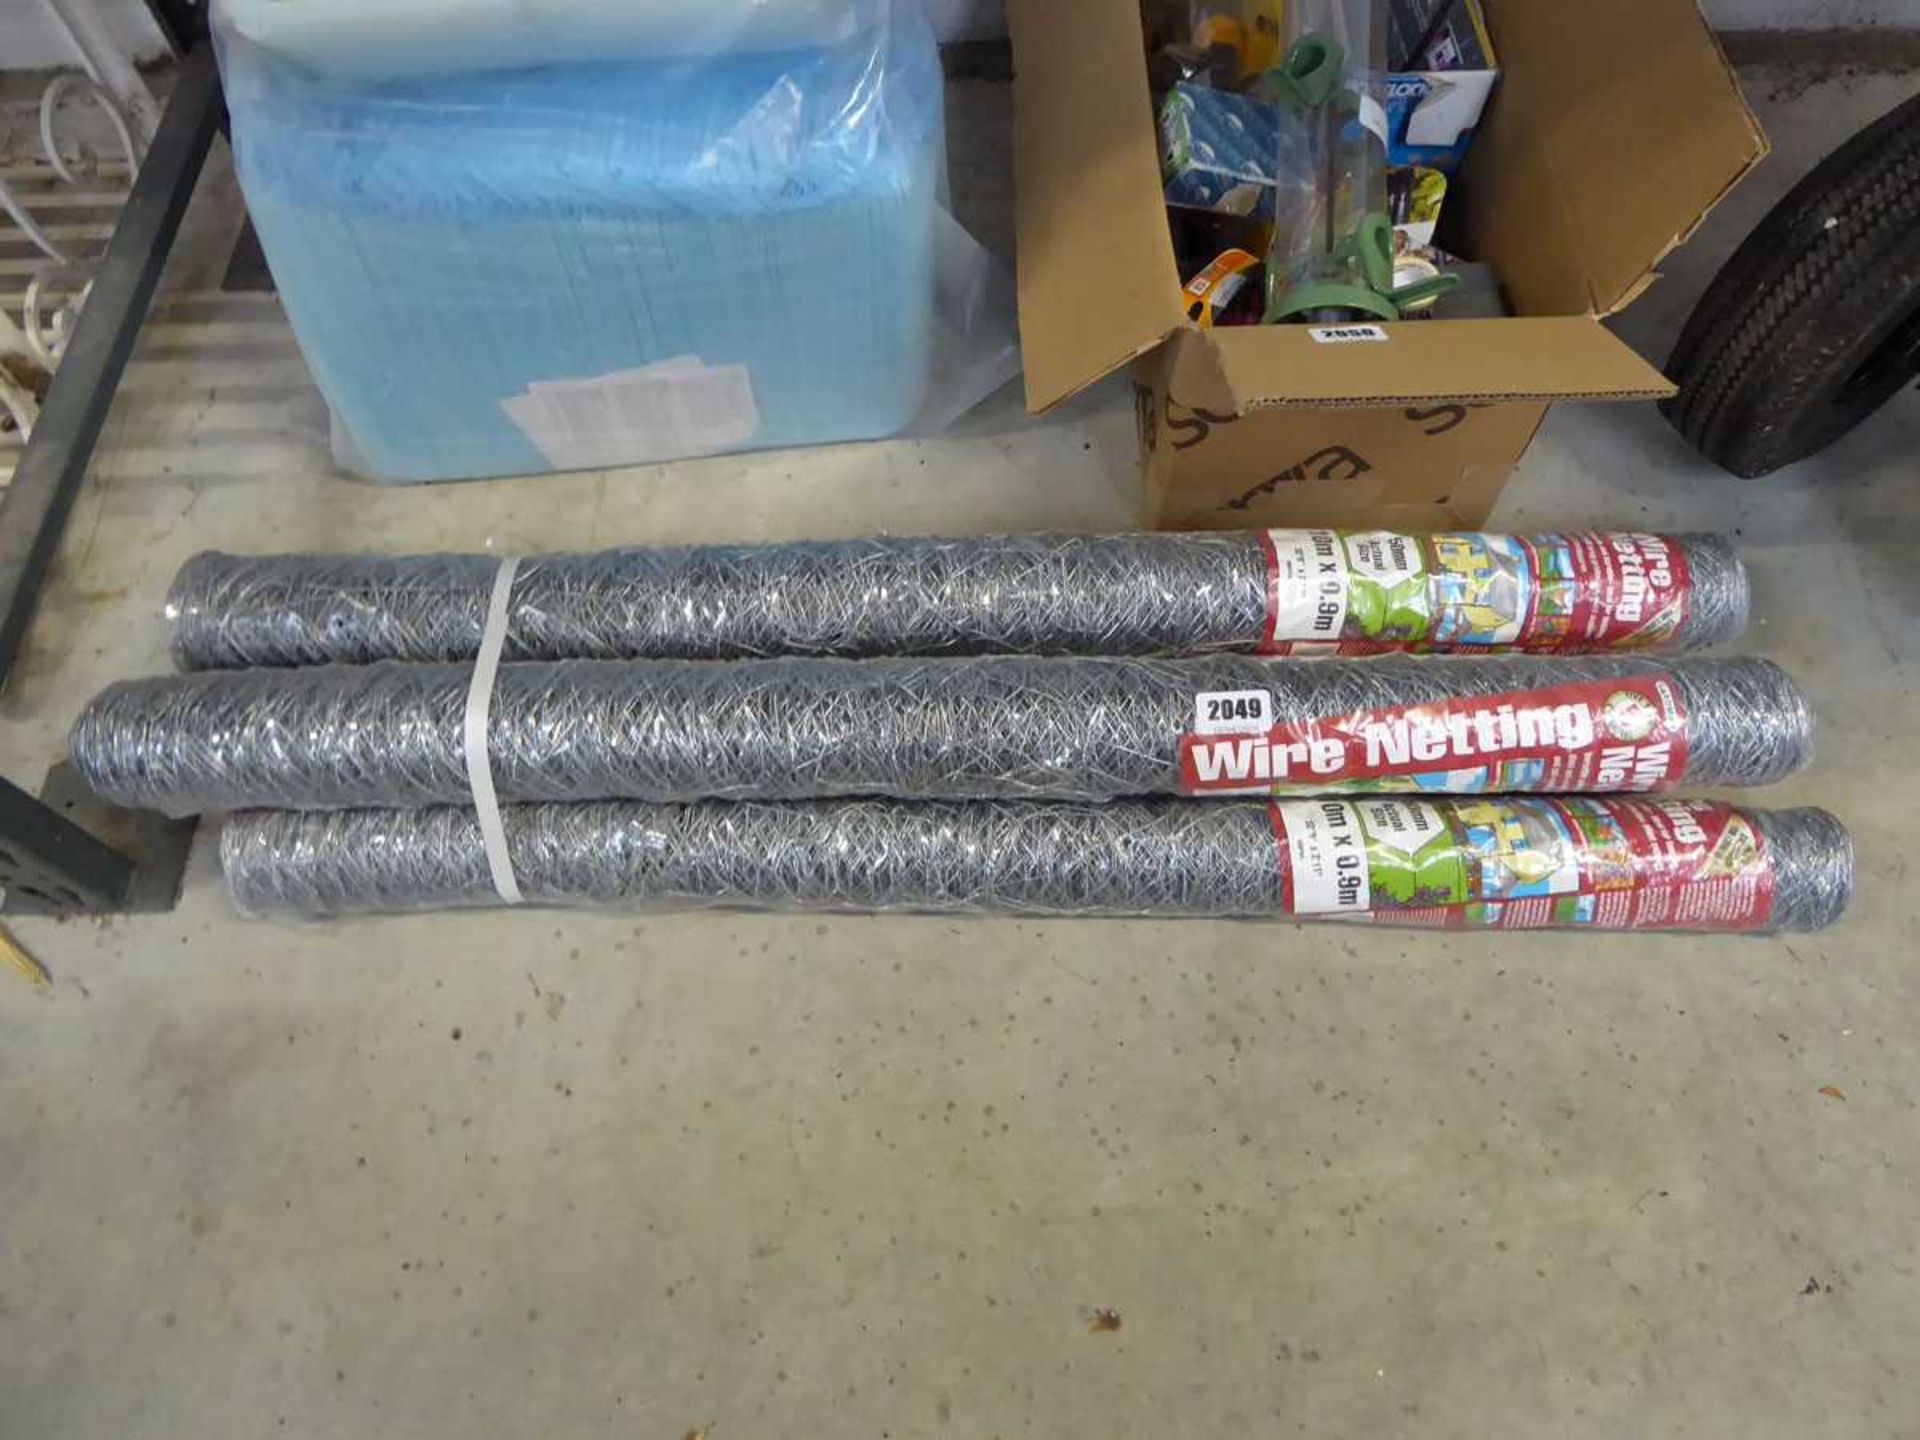 4 10m x 0.9m rolls of galvanised wire netting